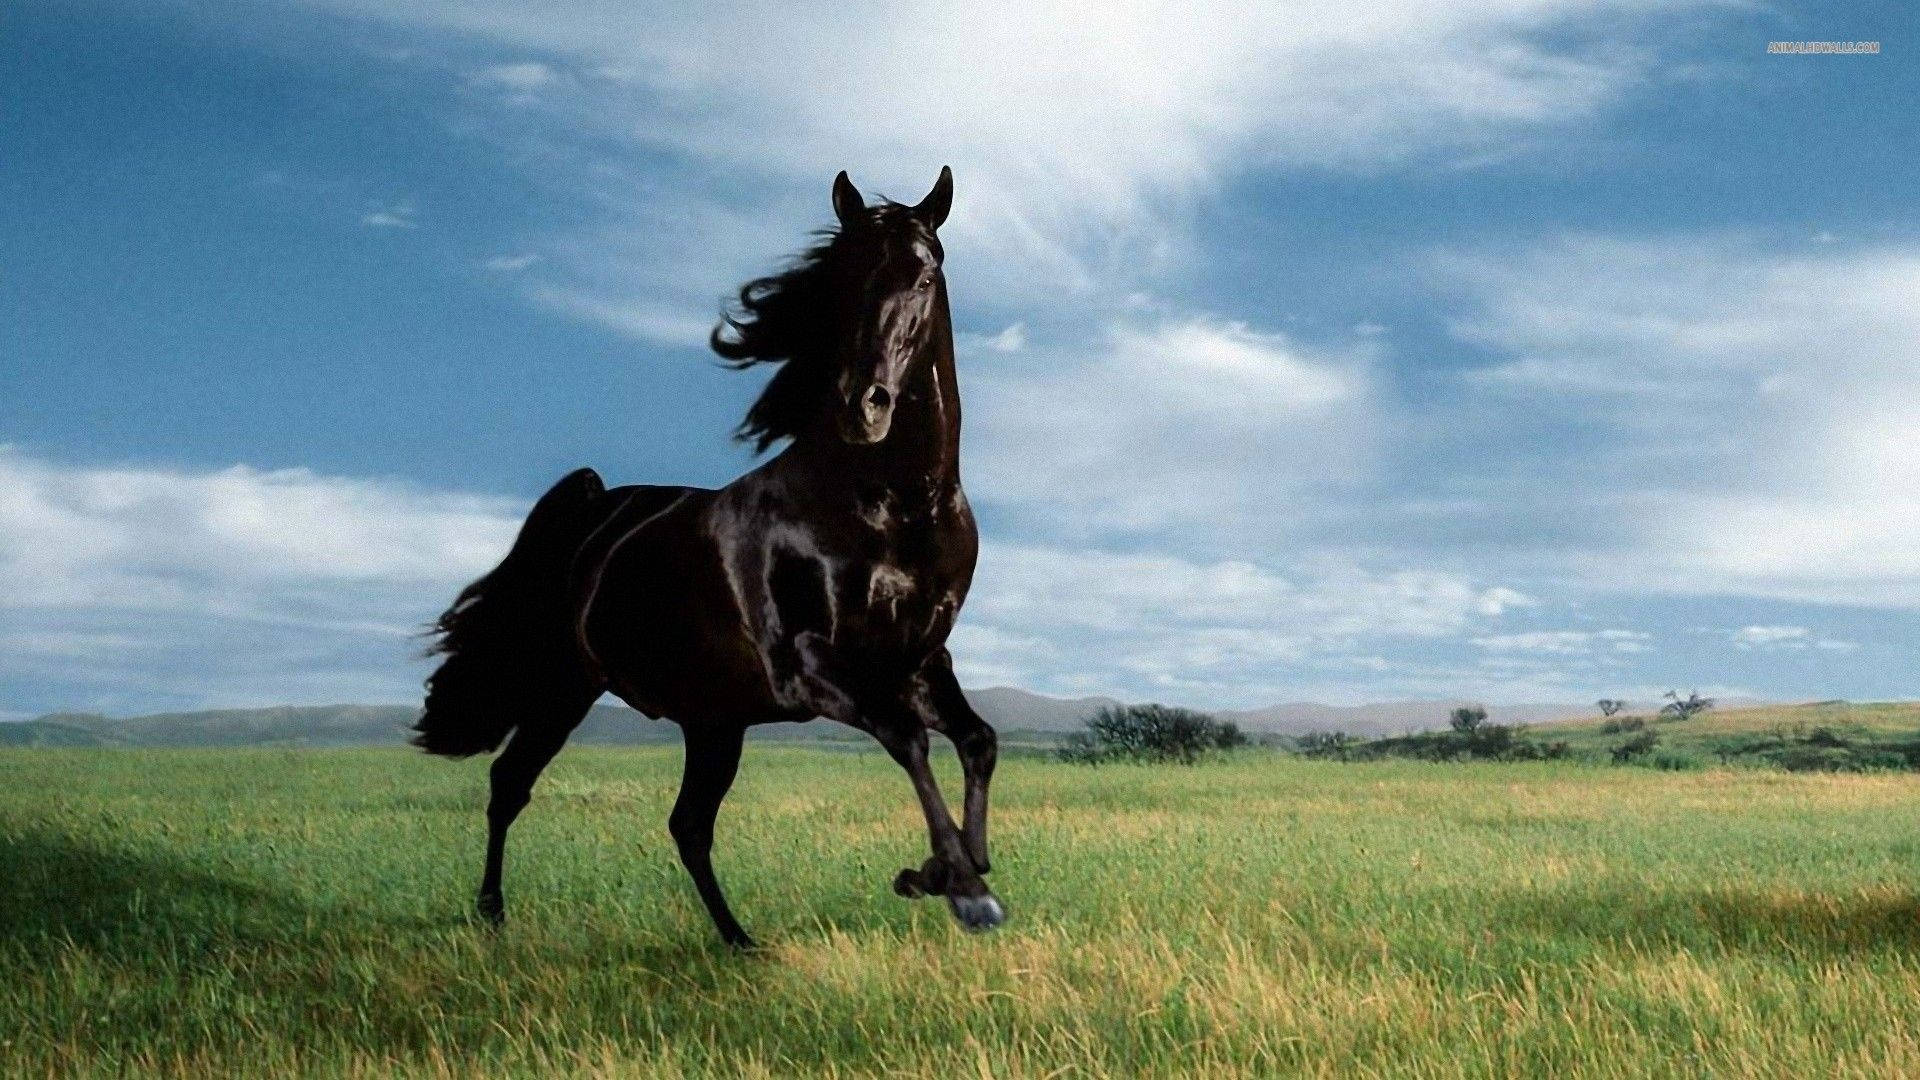 A majestic black horse in a lush pasture Wallpaper